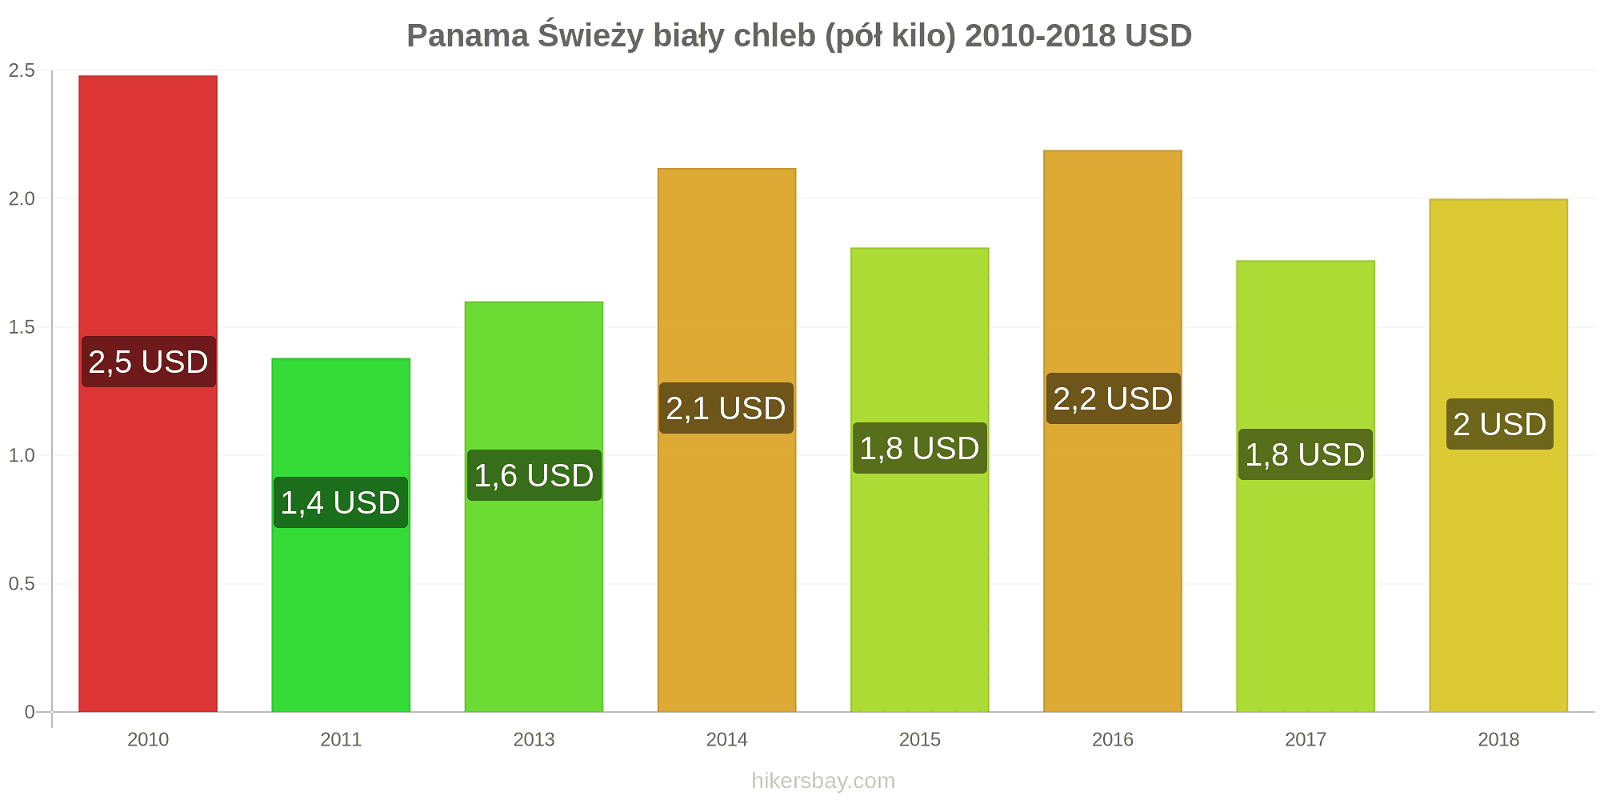 Panama zmiany cen Chleb pół kilo hikersbay.com